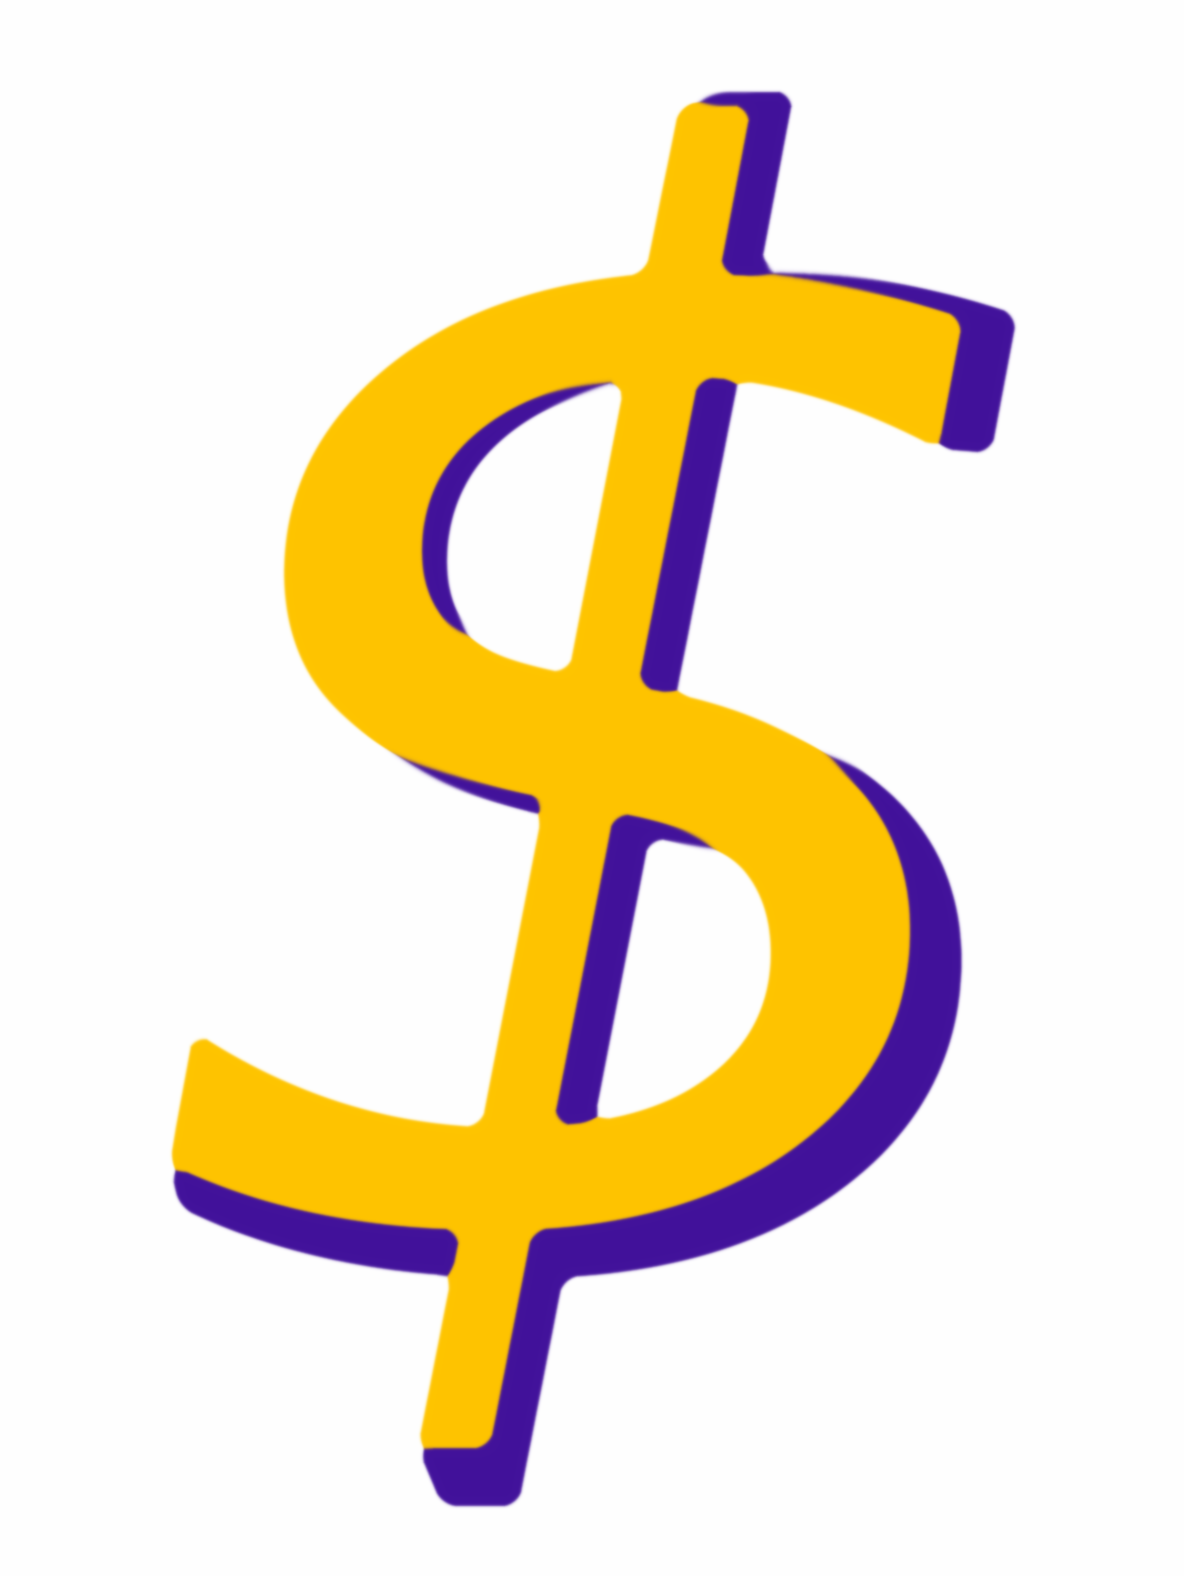 Symbols Simple Minimalism Dollar Money Digital Art Graphic Design 1184x1576